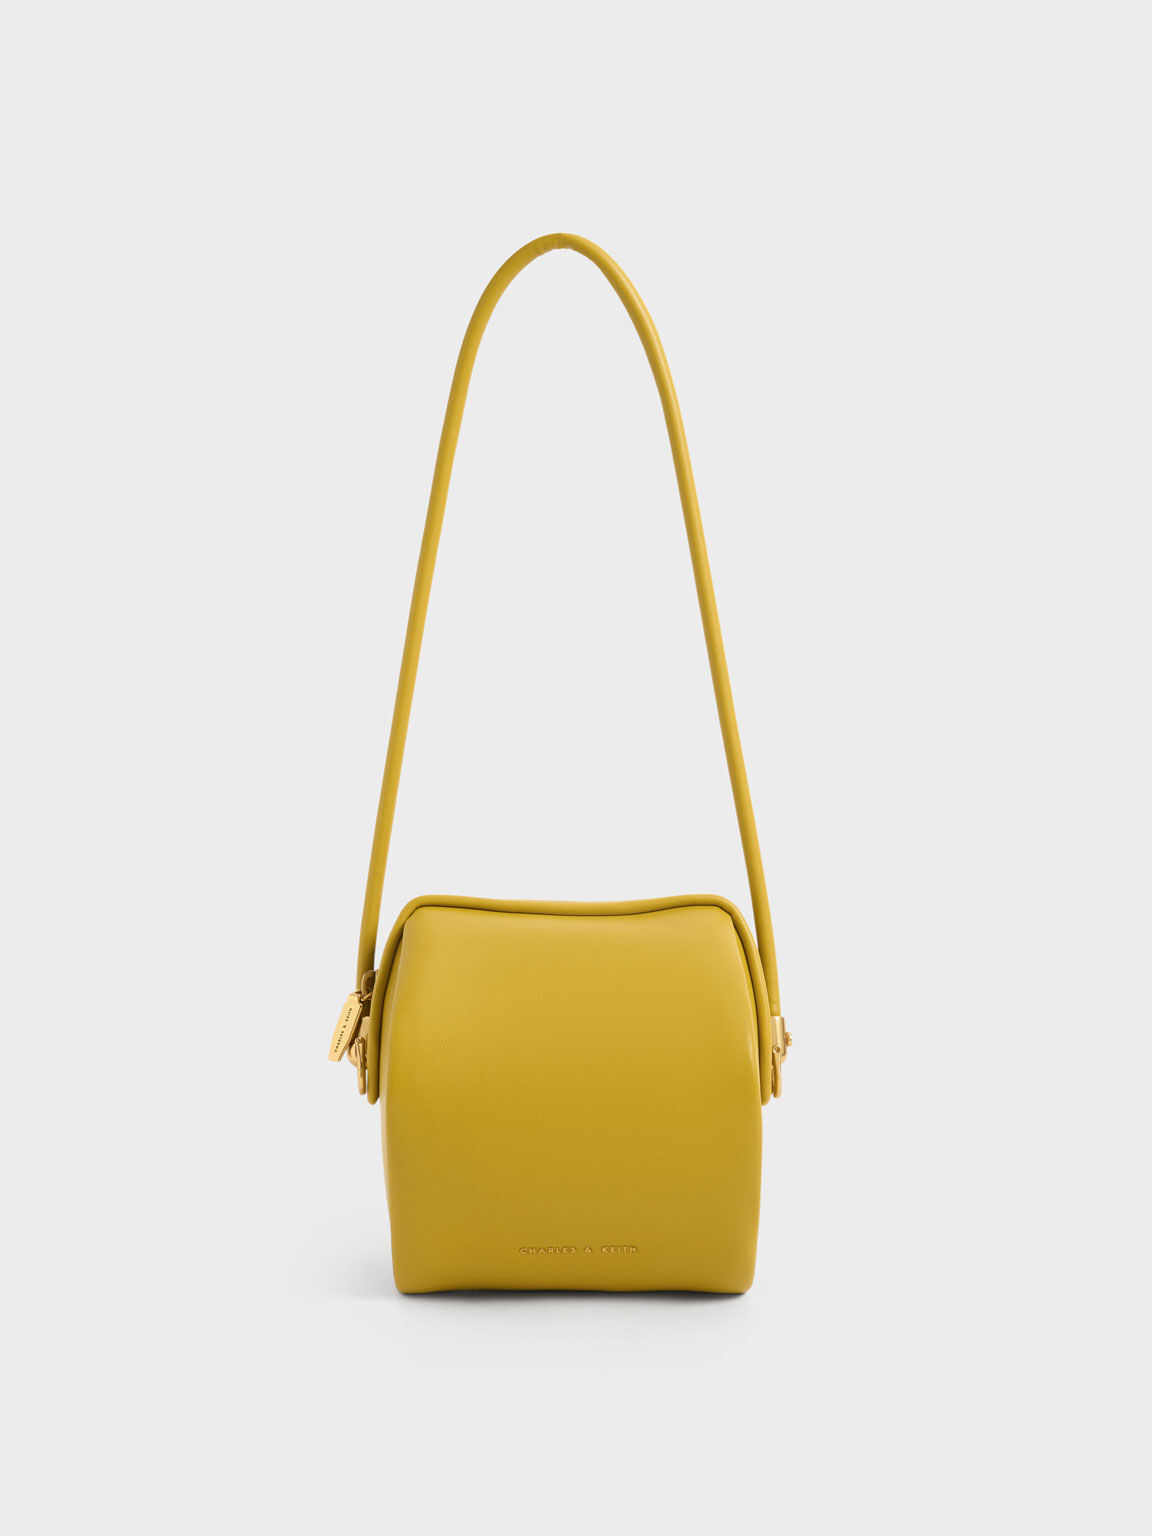 Ridley Chain-Link Boxy Bag, Mustard, hi-res